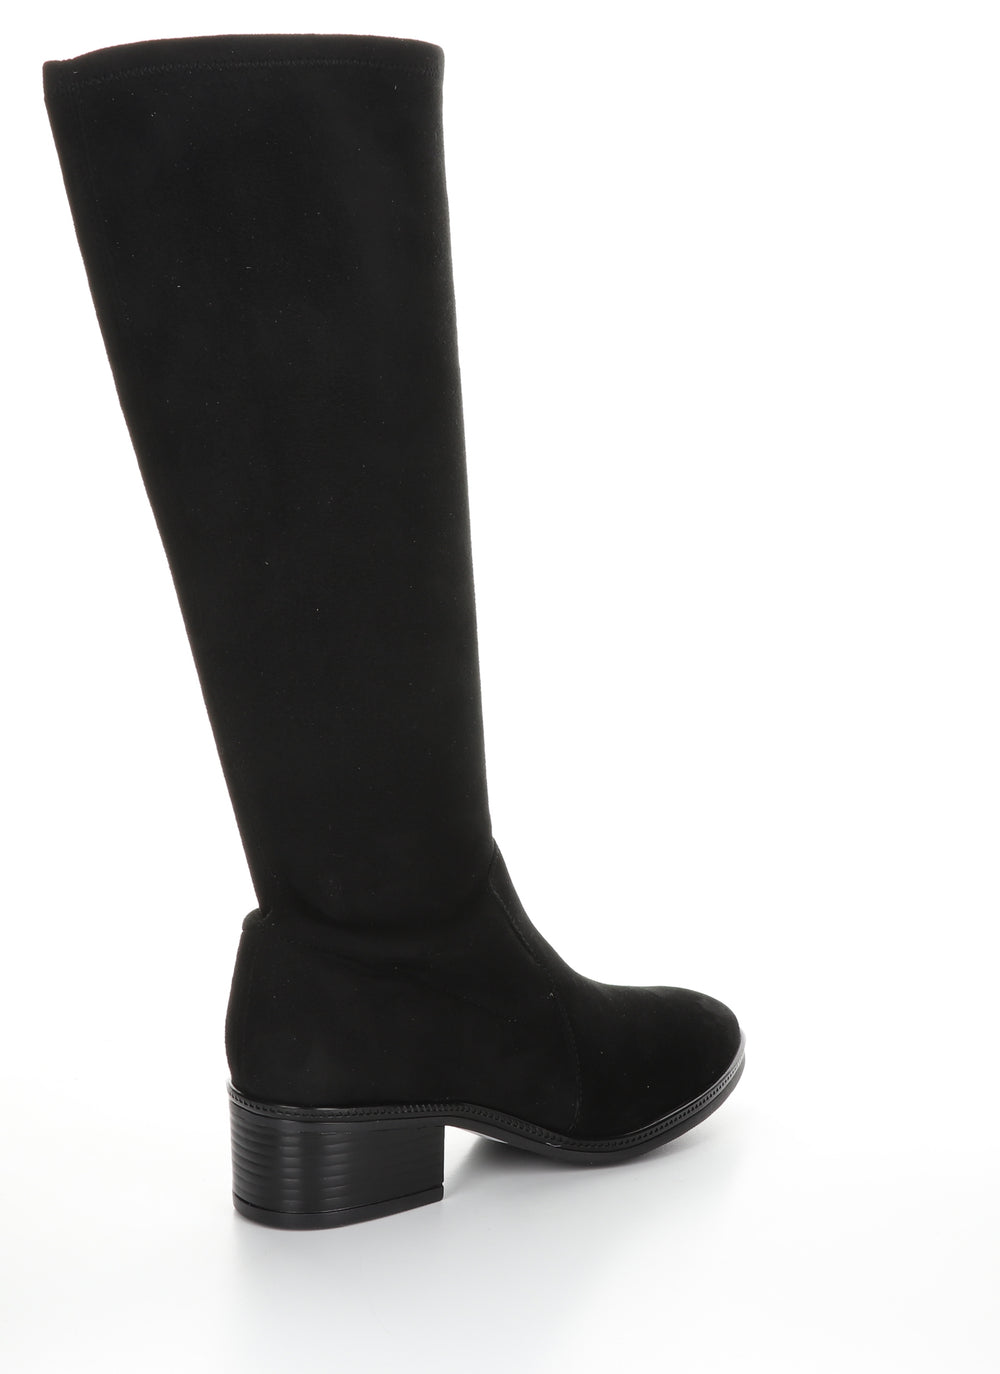 JAVA Black/Black Round Toe Boots|JAVA Bottes à Bout Rond in Noir